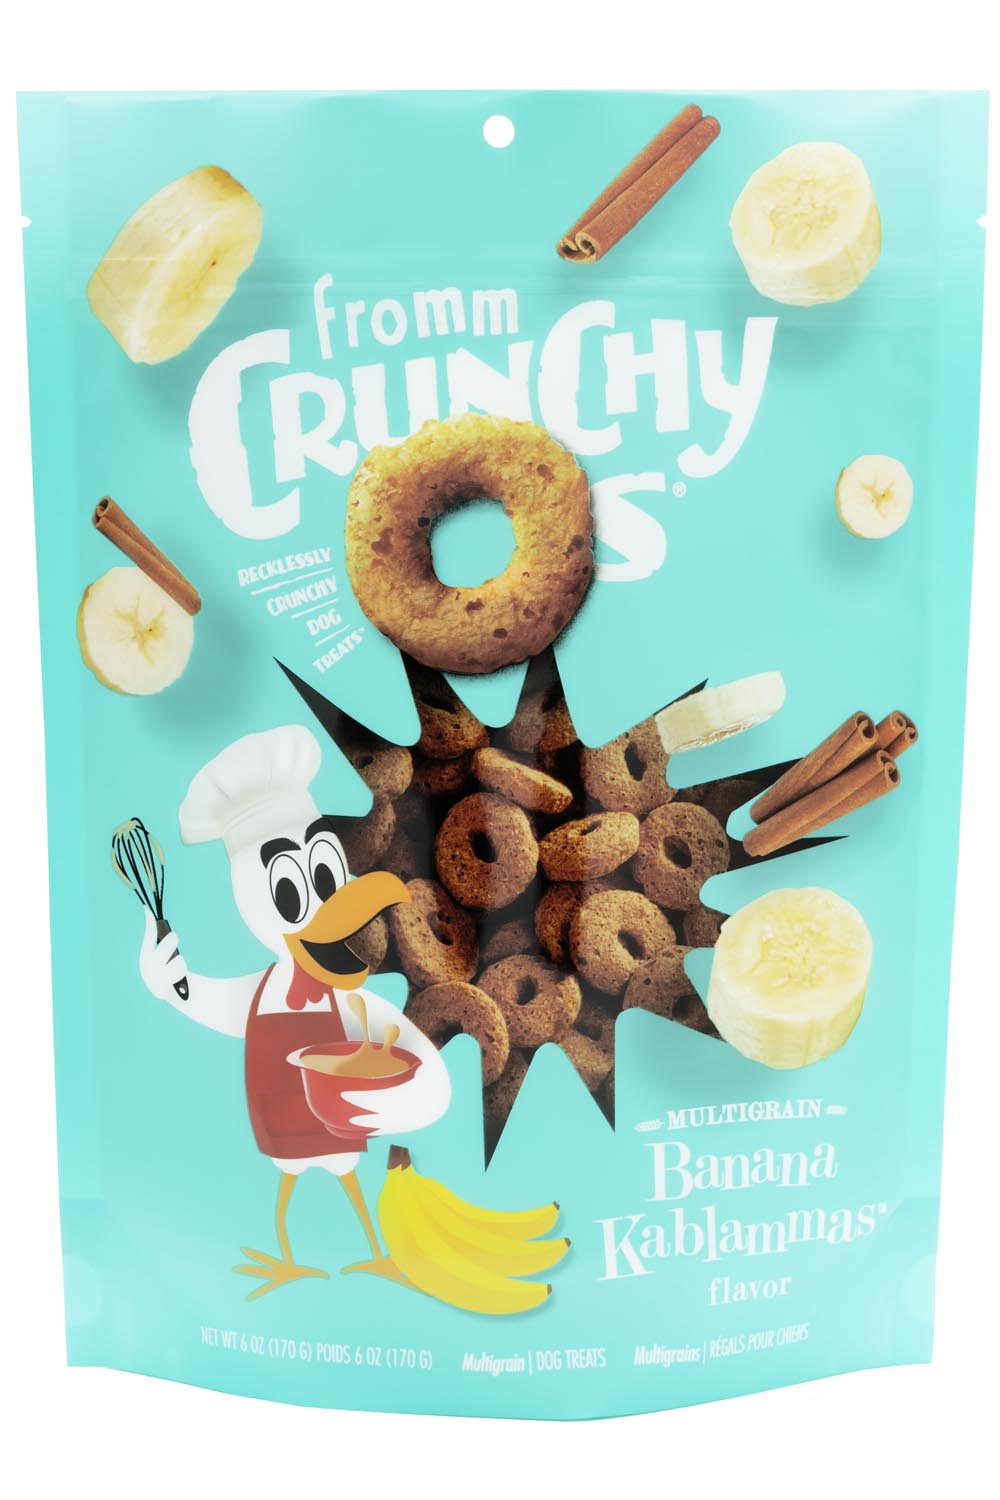 Fromm Crunchy O's Banana Kablamas 6oz